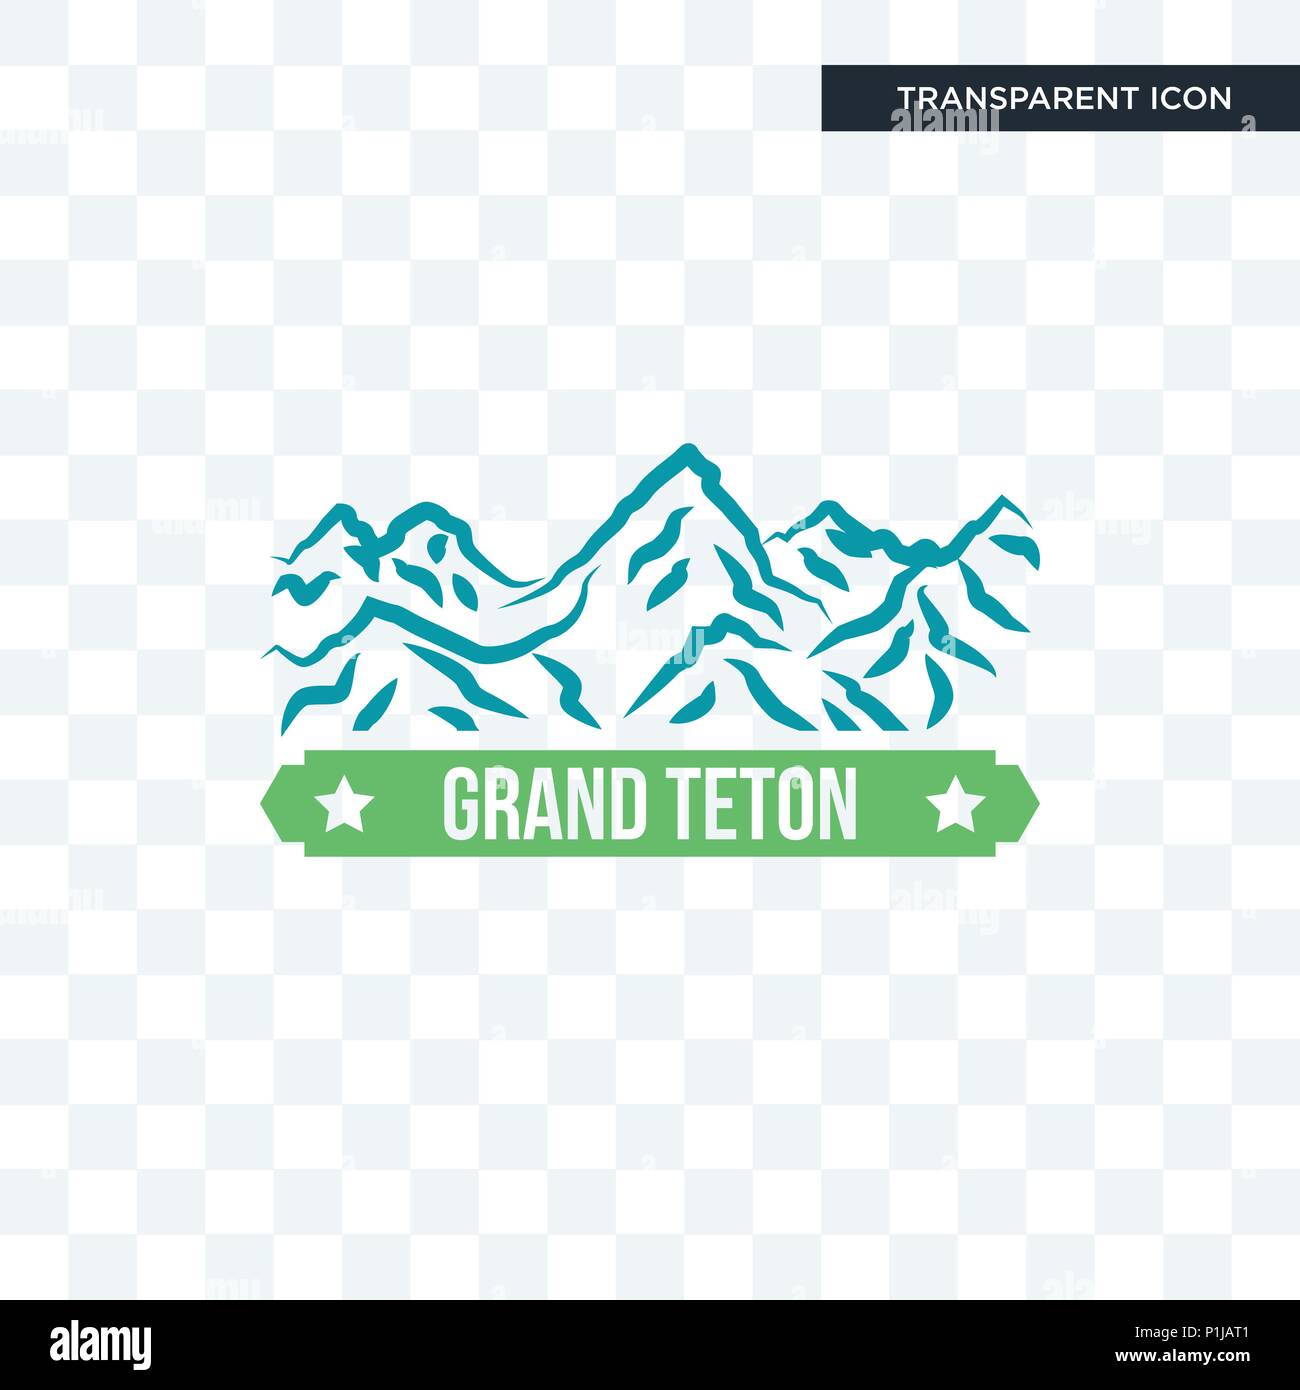 Grand Teton vektor Icon auf transparentem Hintergrund isoliert, Grand Teton logo Konzept Stock Vektor